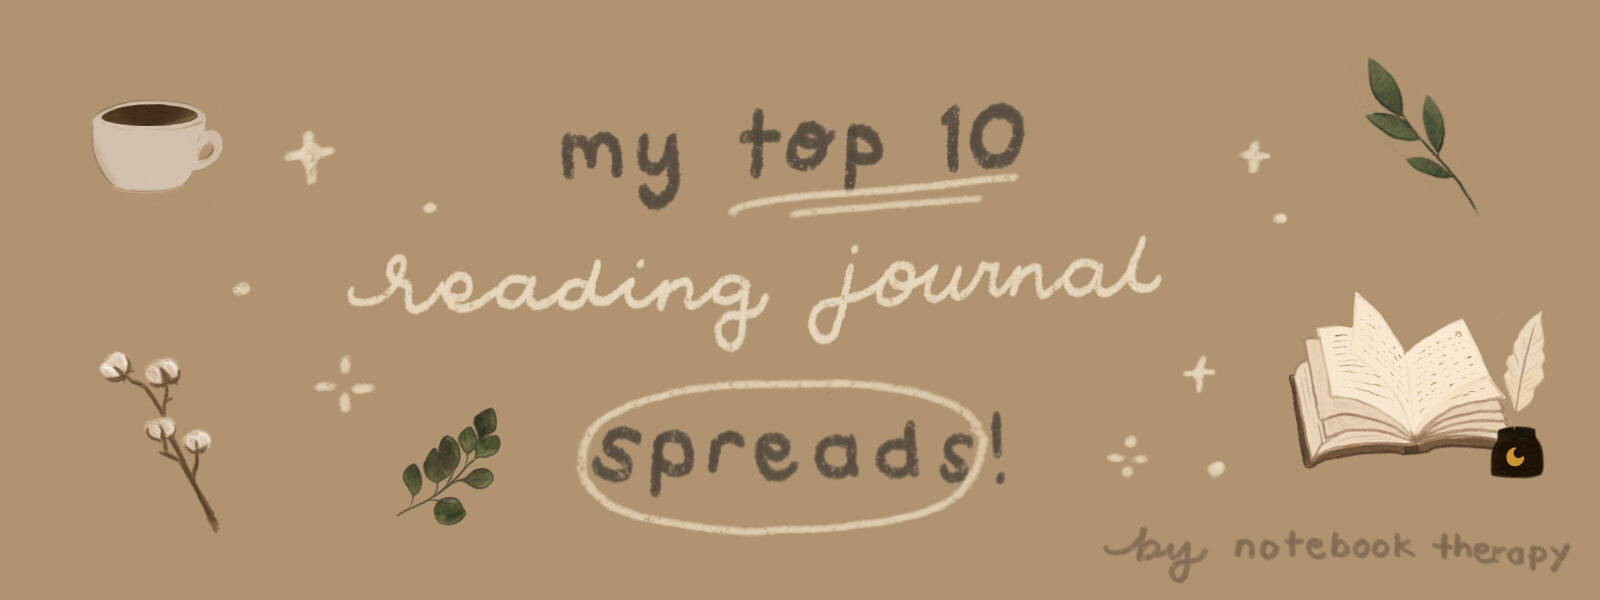 Top Reading Journal Supplies